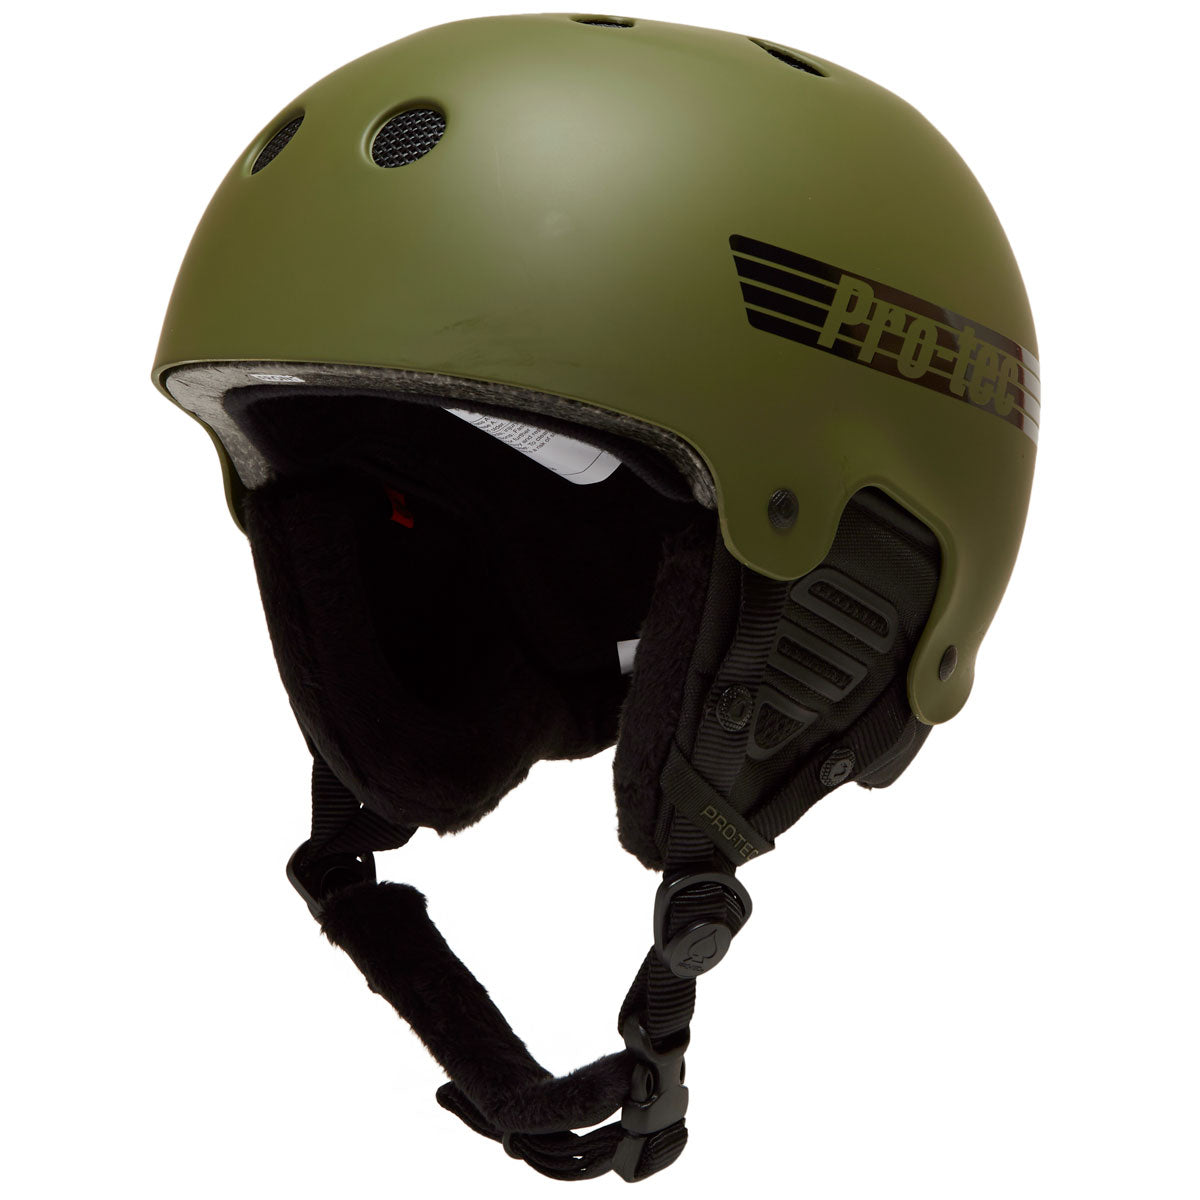 Pro Tec Old School With Mips Snowboard Helmet - Matte Olive image 1